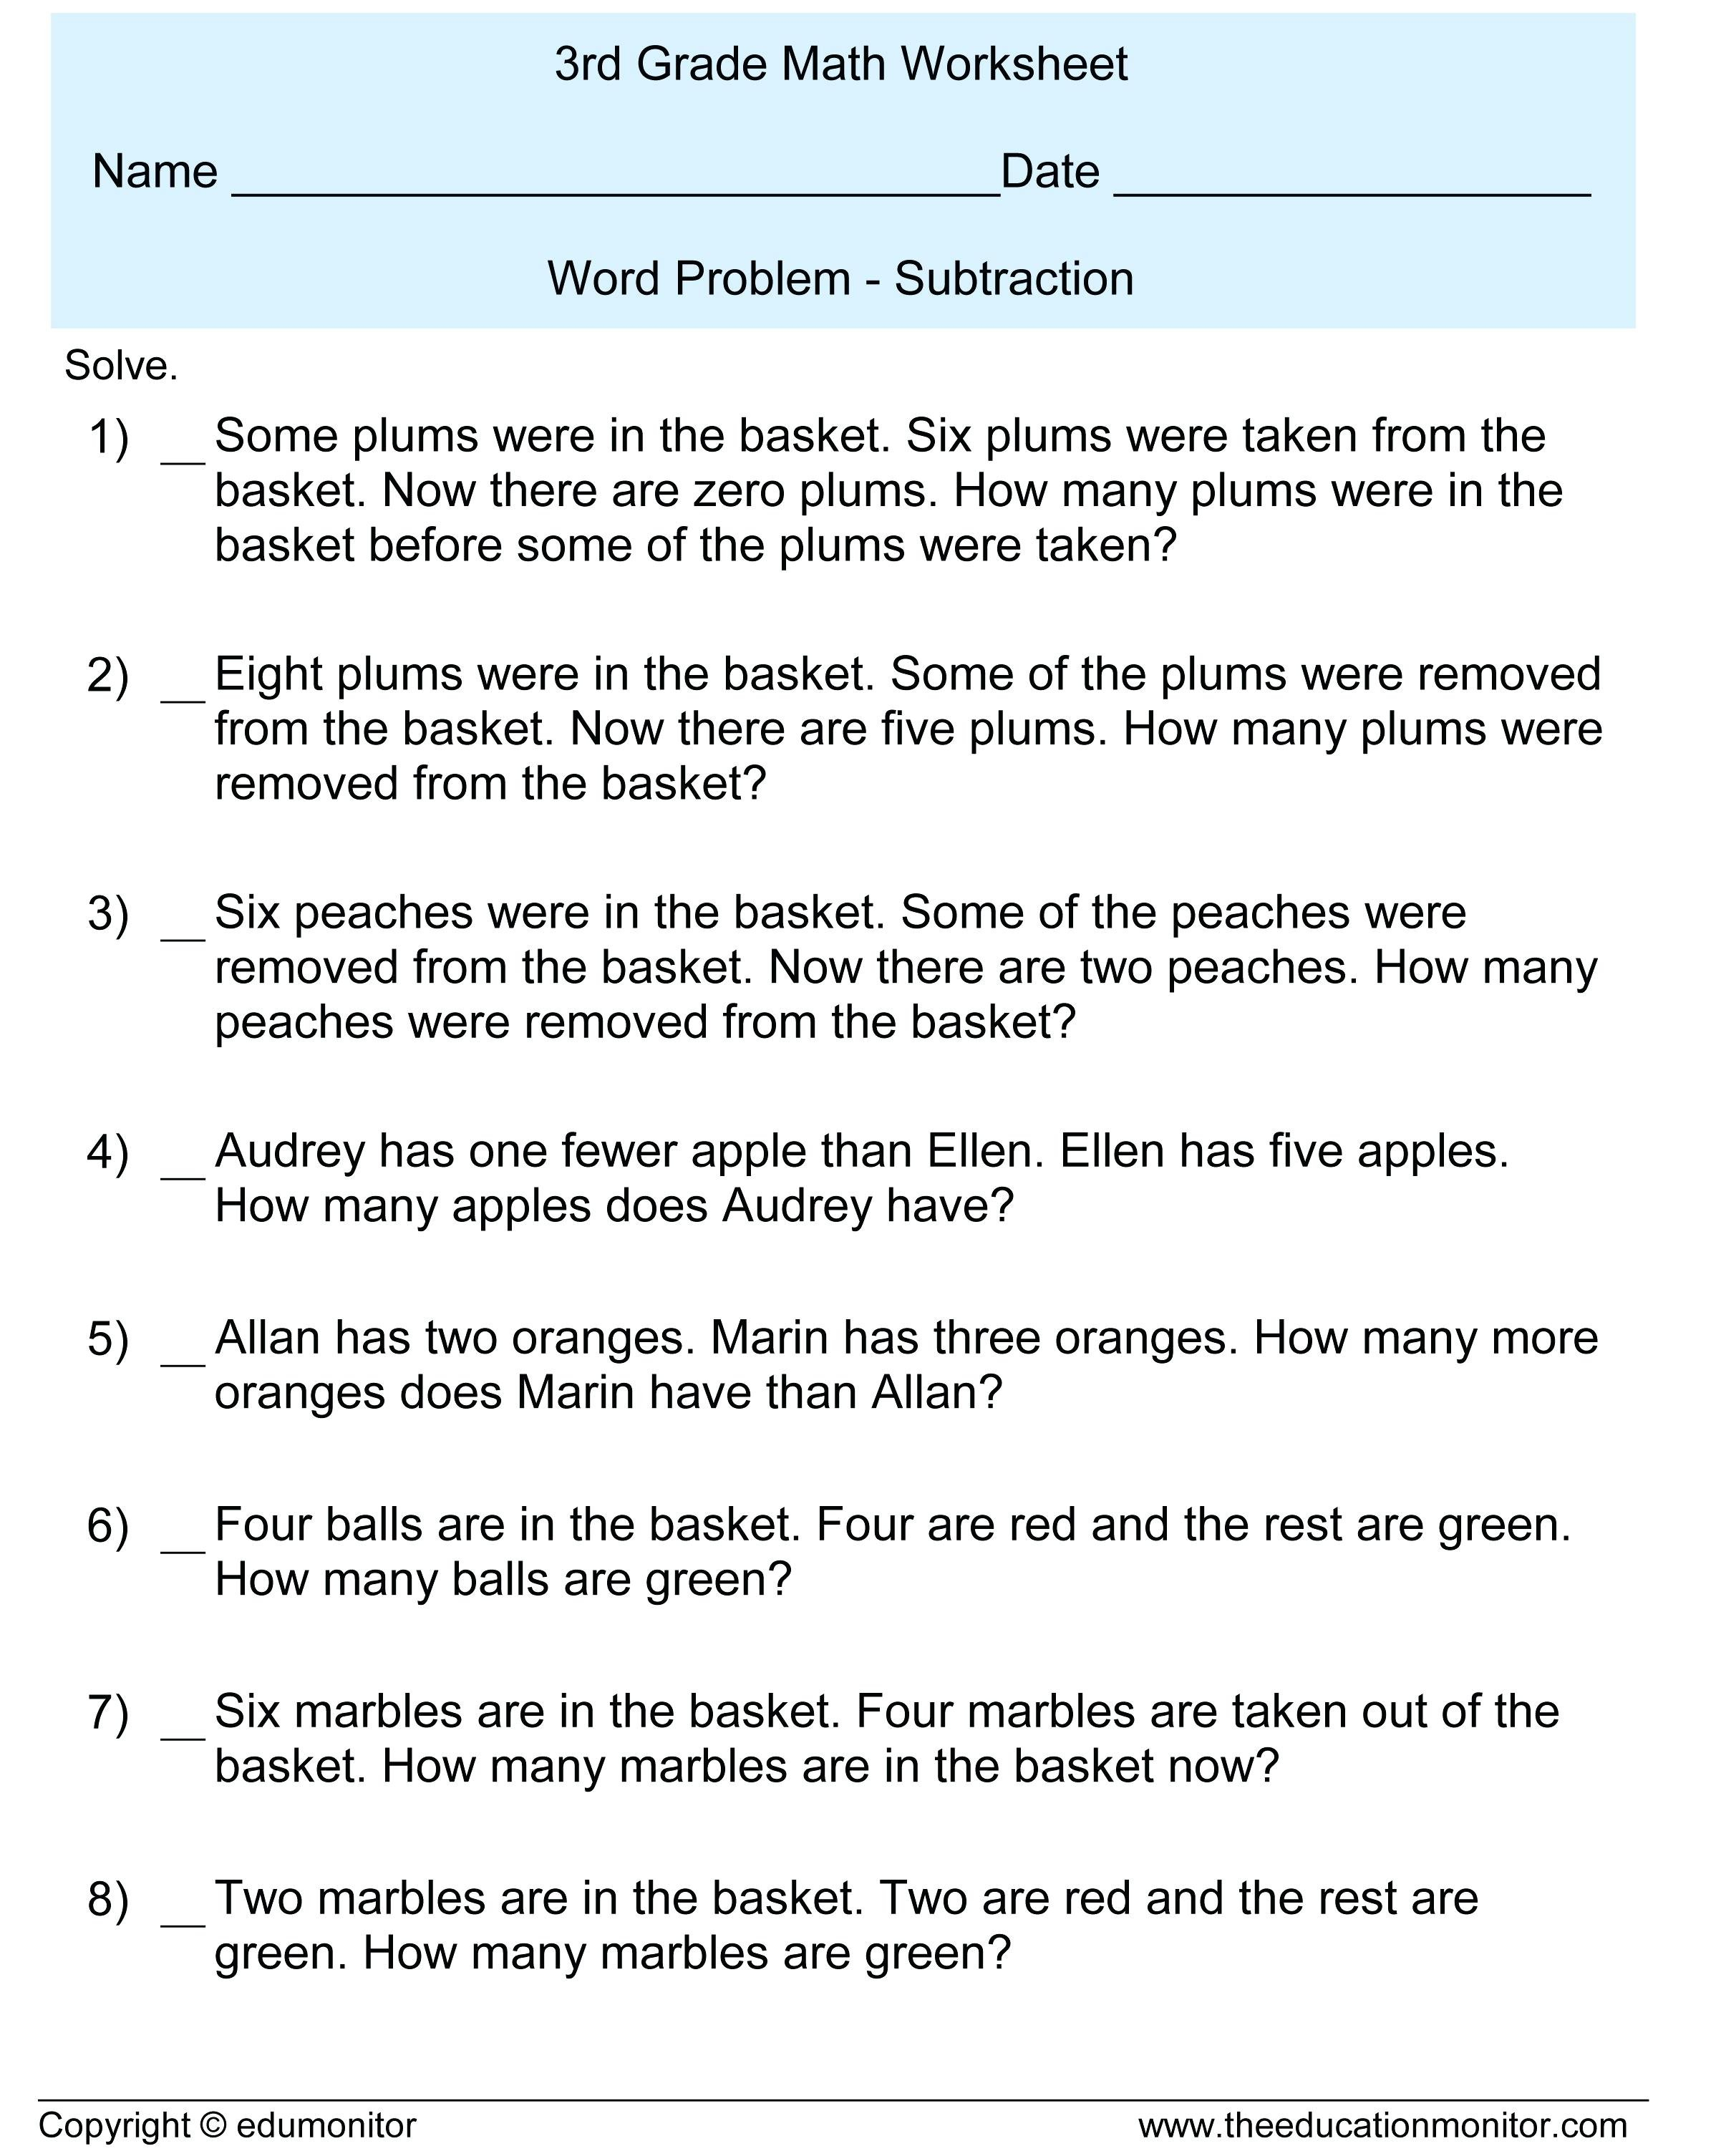 4Th Grade Math Word Problems Worksheets Worksheets Math Word Within 4Th Grade Math Word Problems Worksheets Pdf